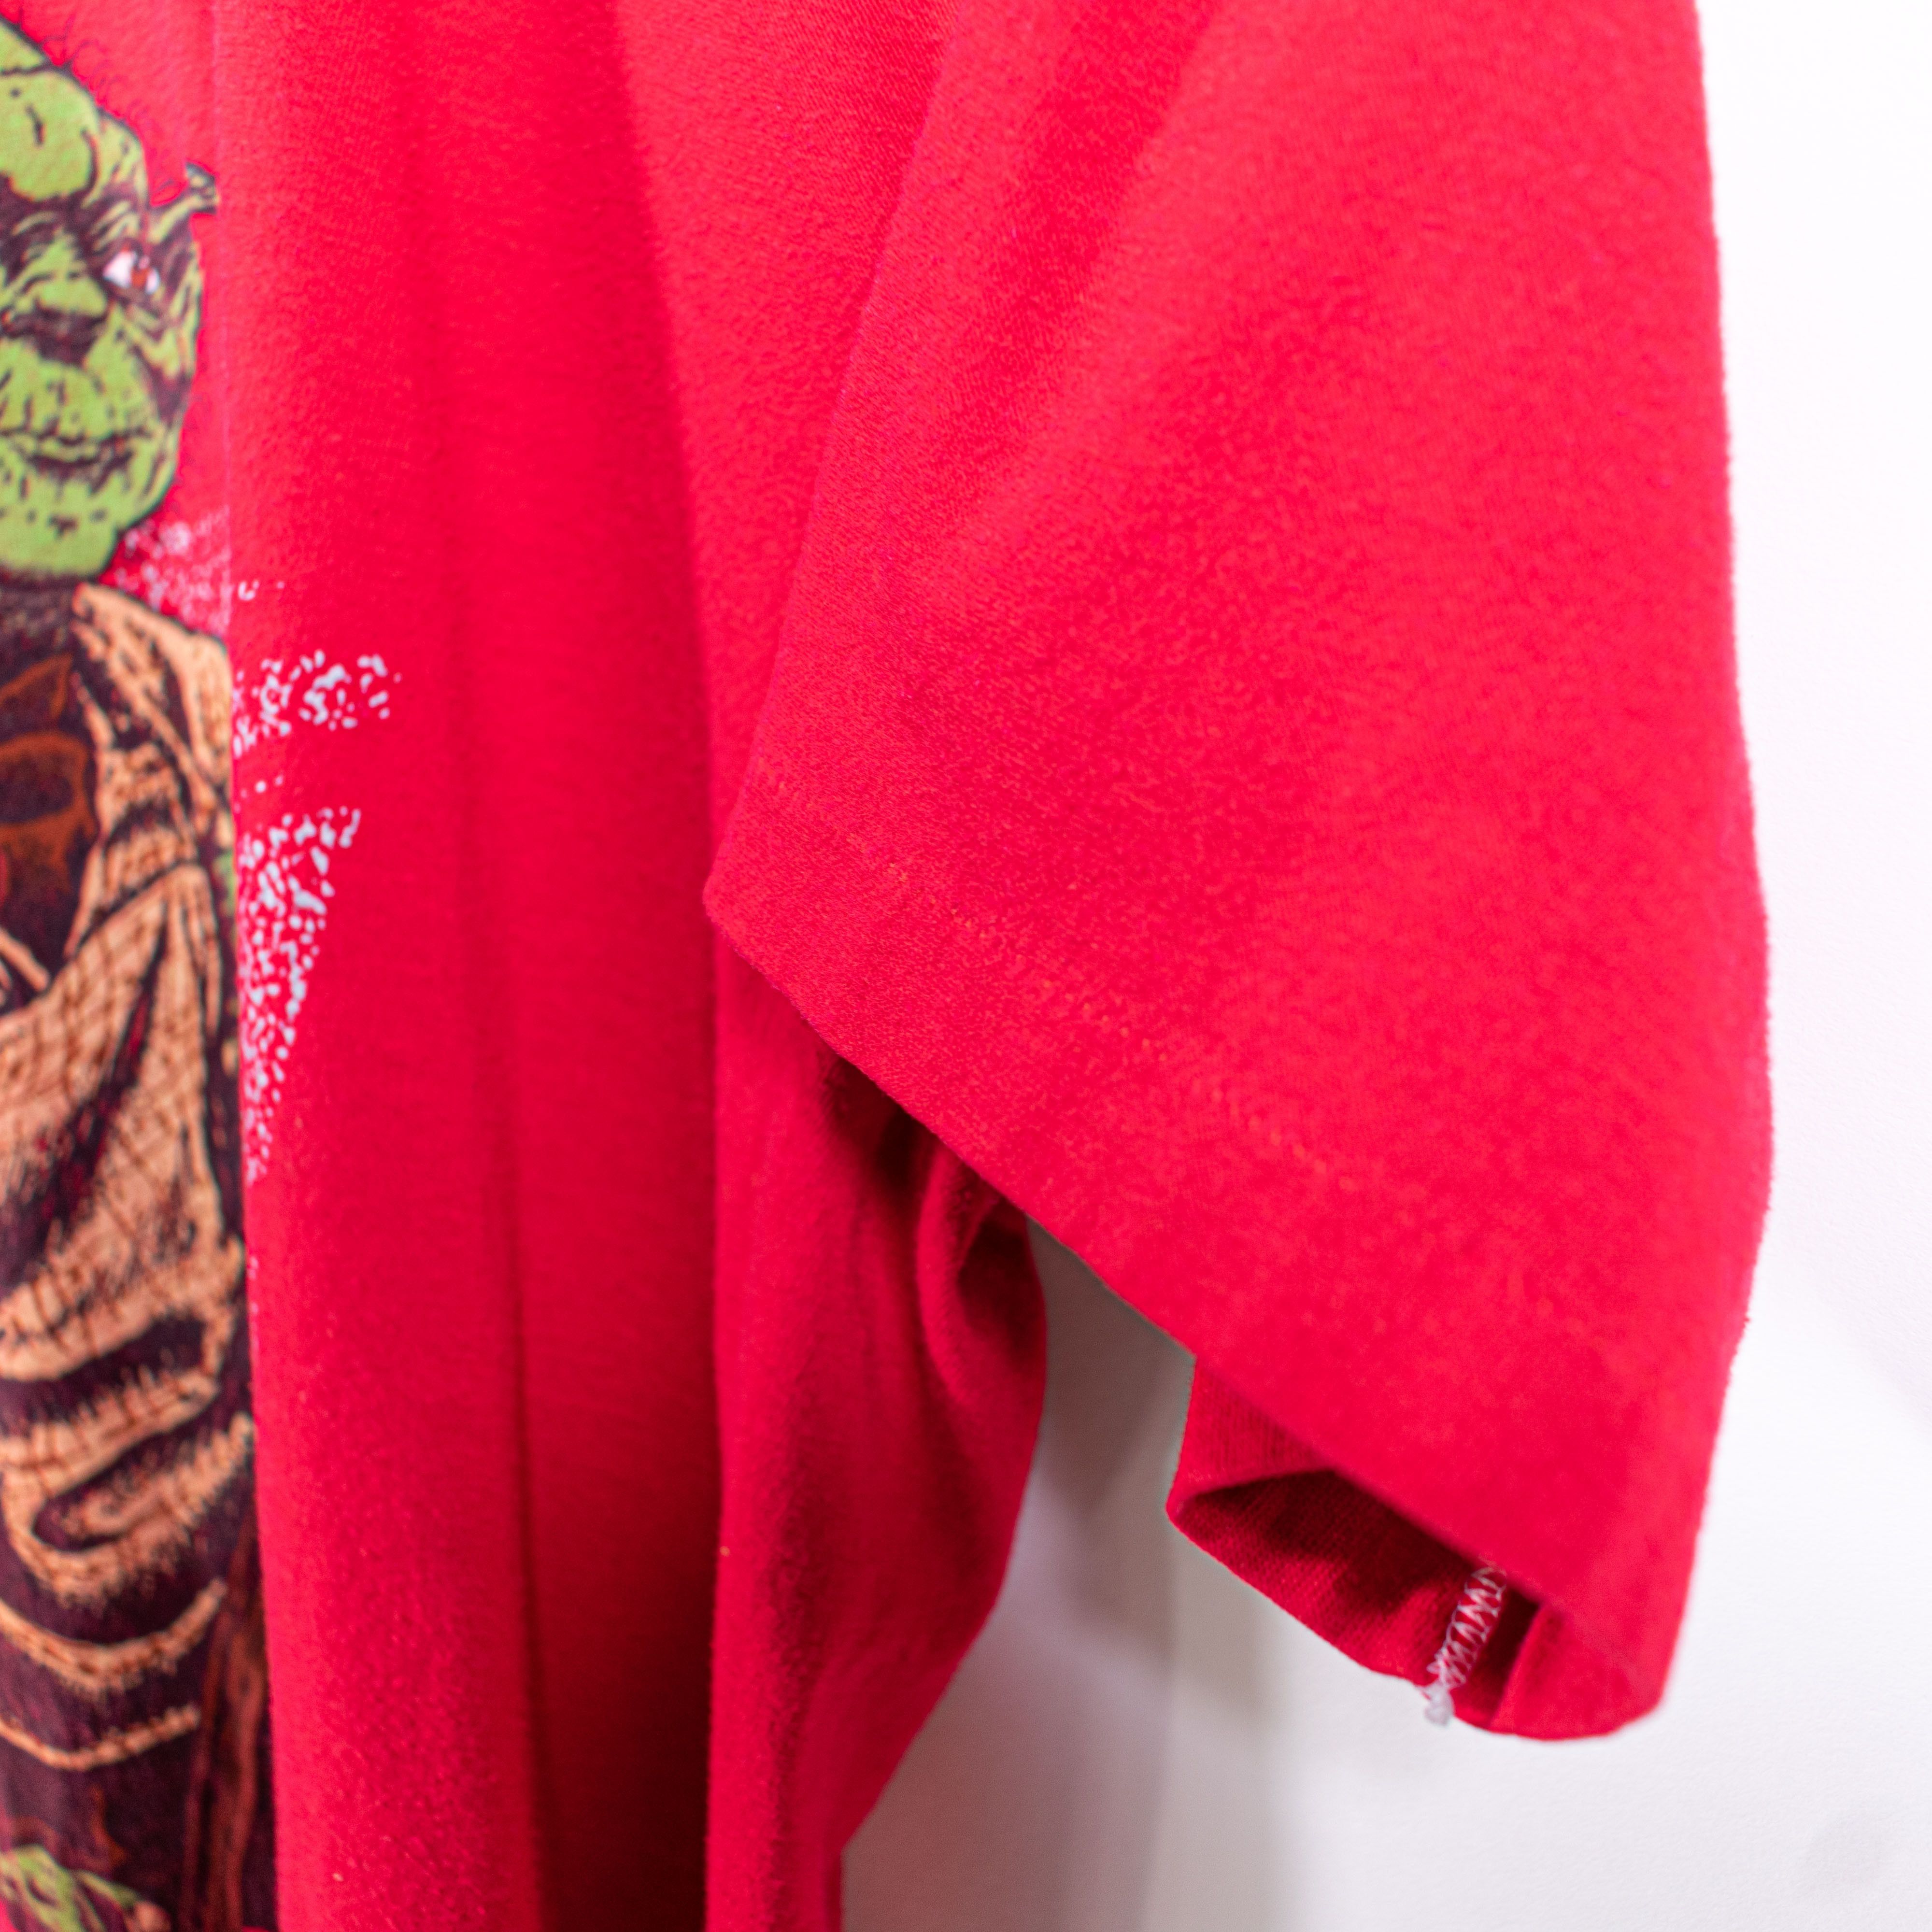 Vintage Star Wars Jedi Master Yoda T-Shirt VTG Artex George Lucas Size US L / EU 52-54 / 3 - 8 Preview